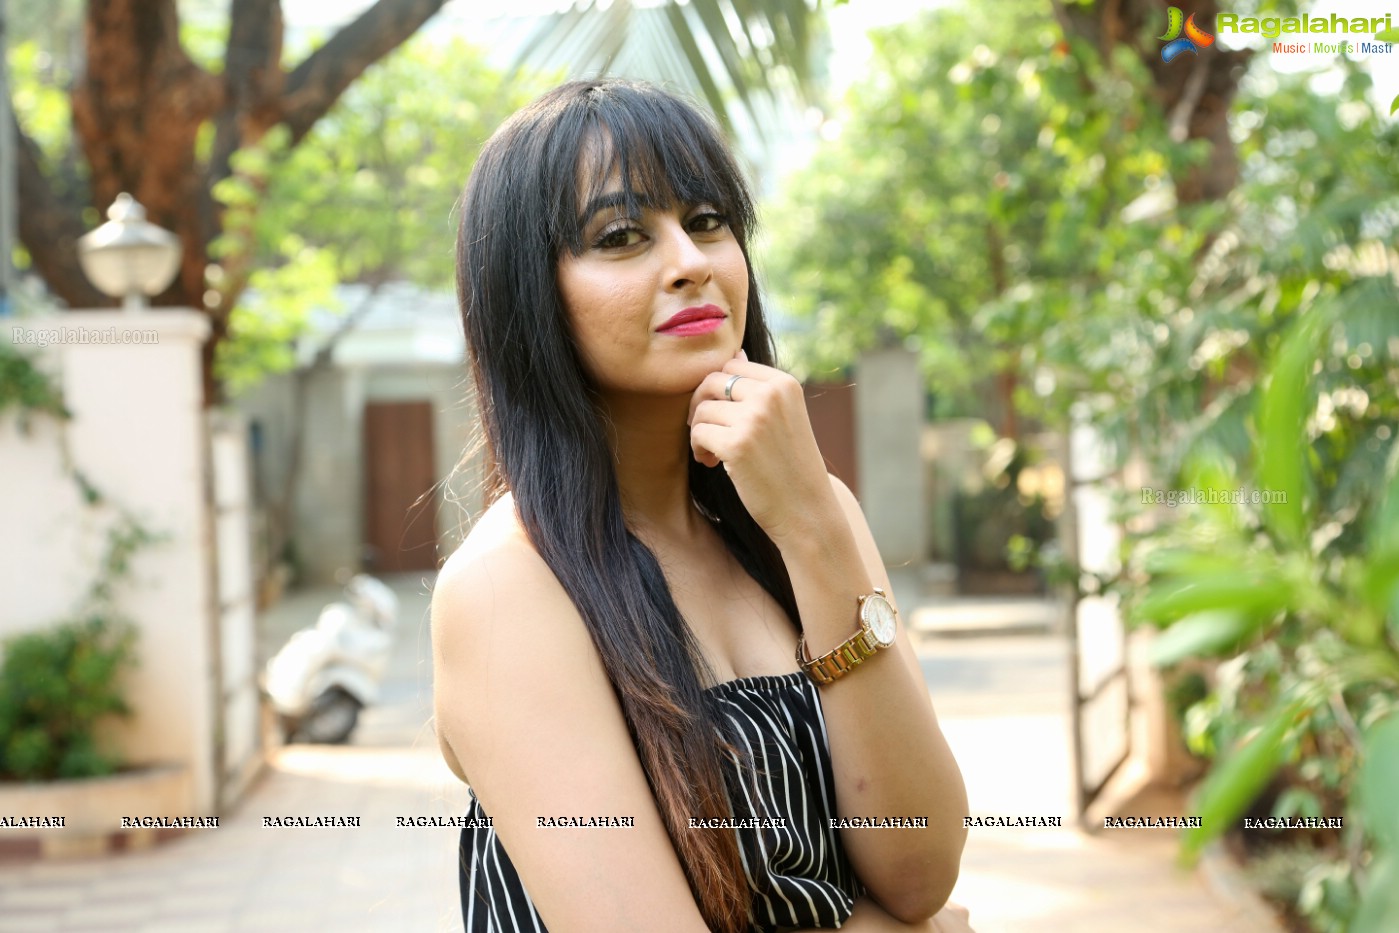 Ameeksha Amy Pawar at Celeb Konnect Mobile App Launch (Posters)